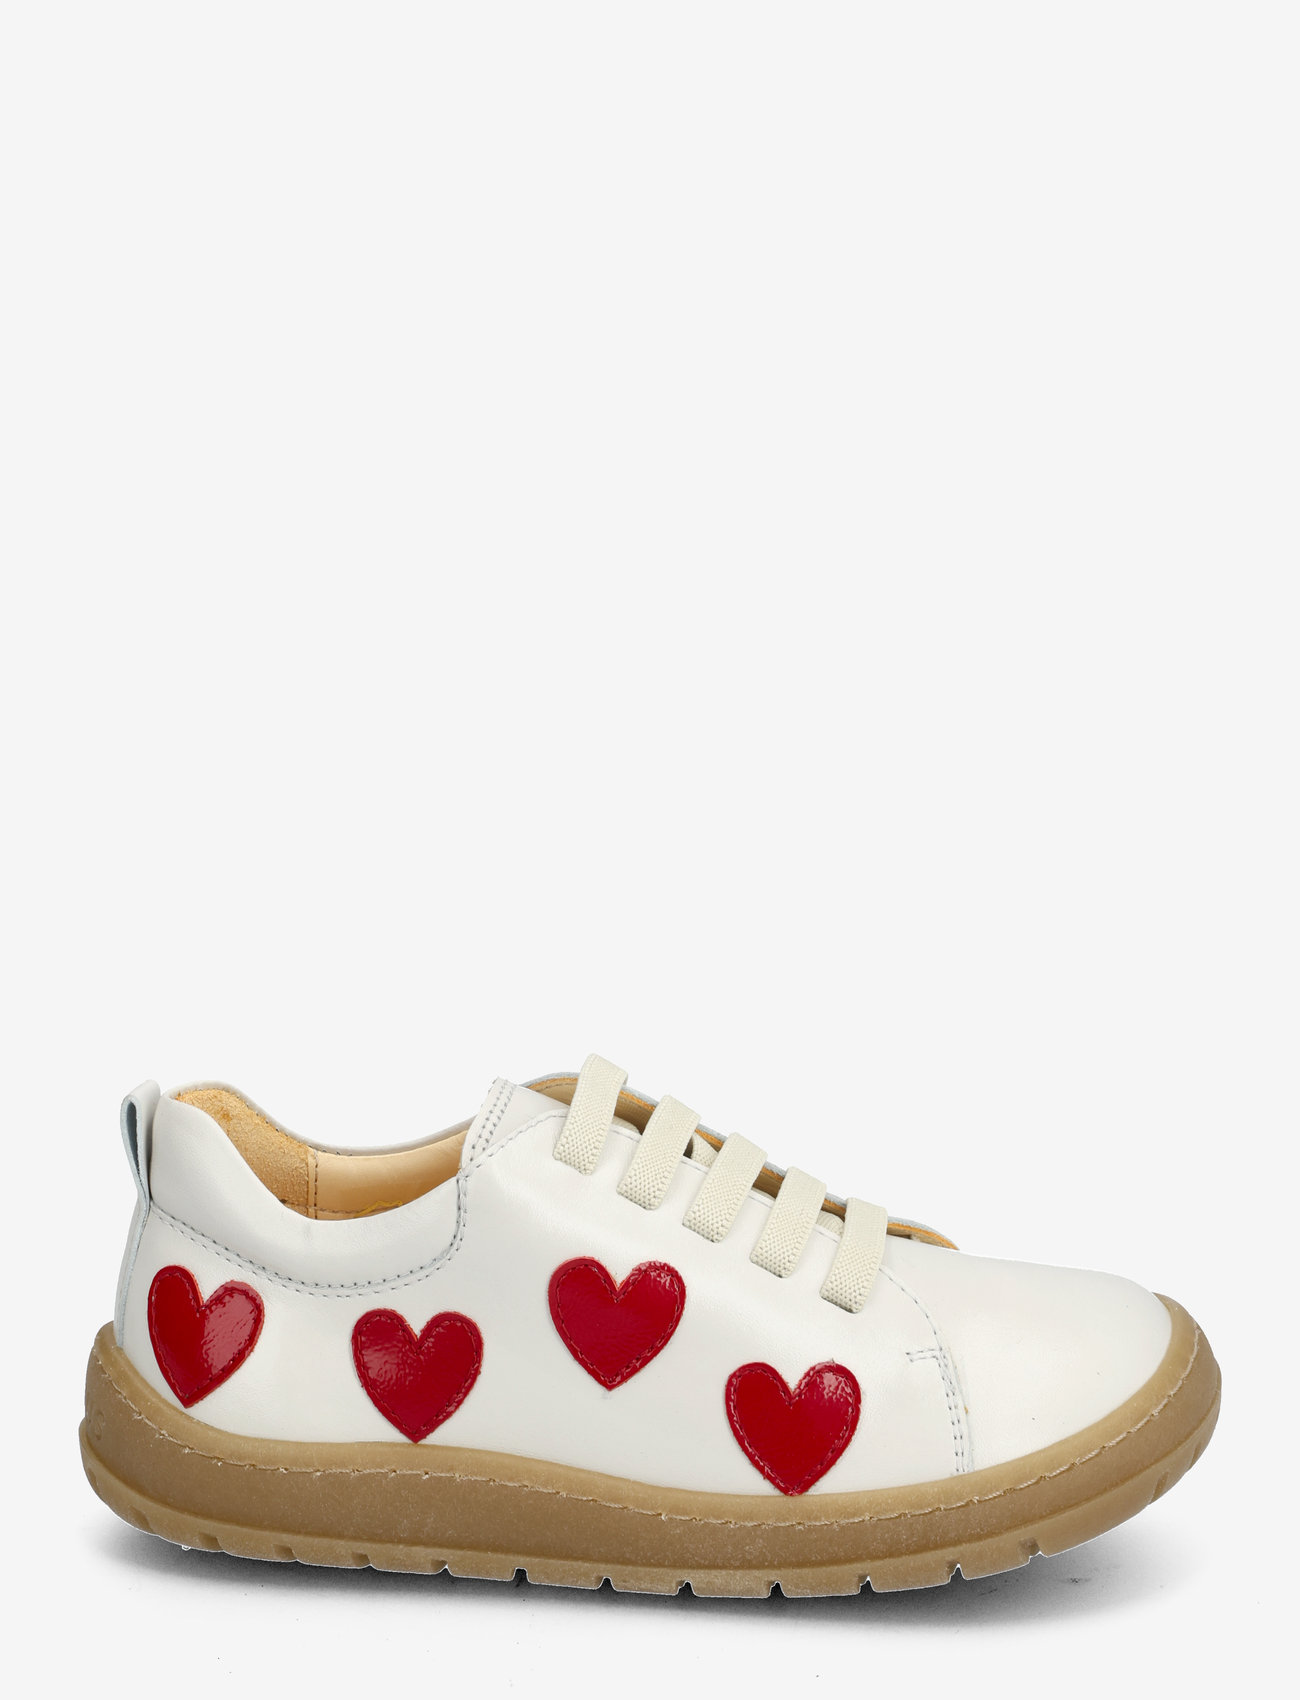 ANGULUS - Shoes - flat - with lace - kesälöytöjä - 1493/a004 off white/hearts - 1